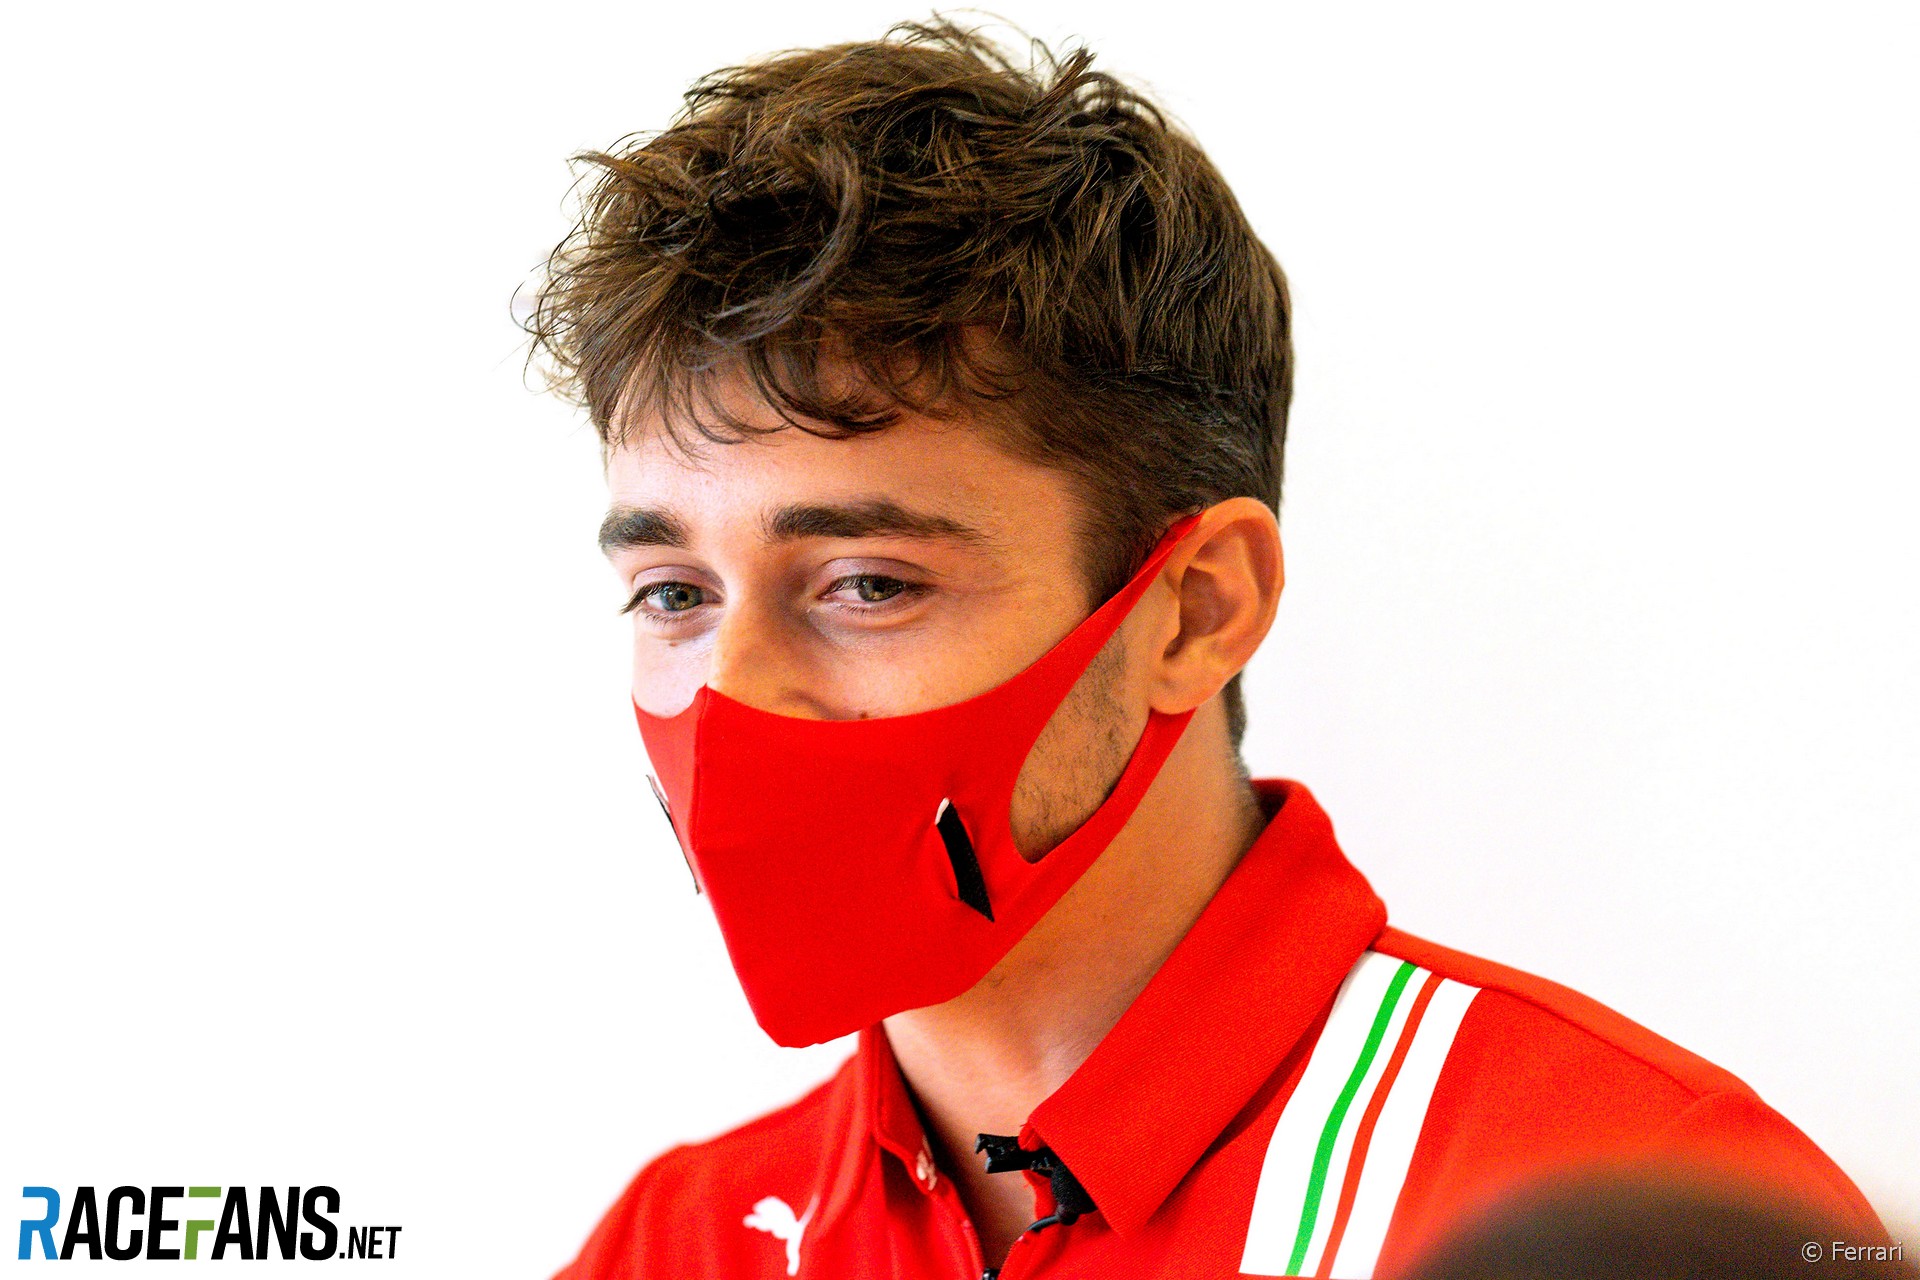 Charles Leclerc, Ferrari, Red Bull Ring, 2020